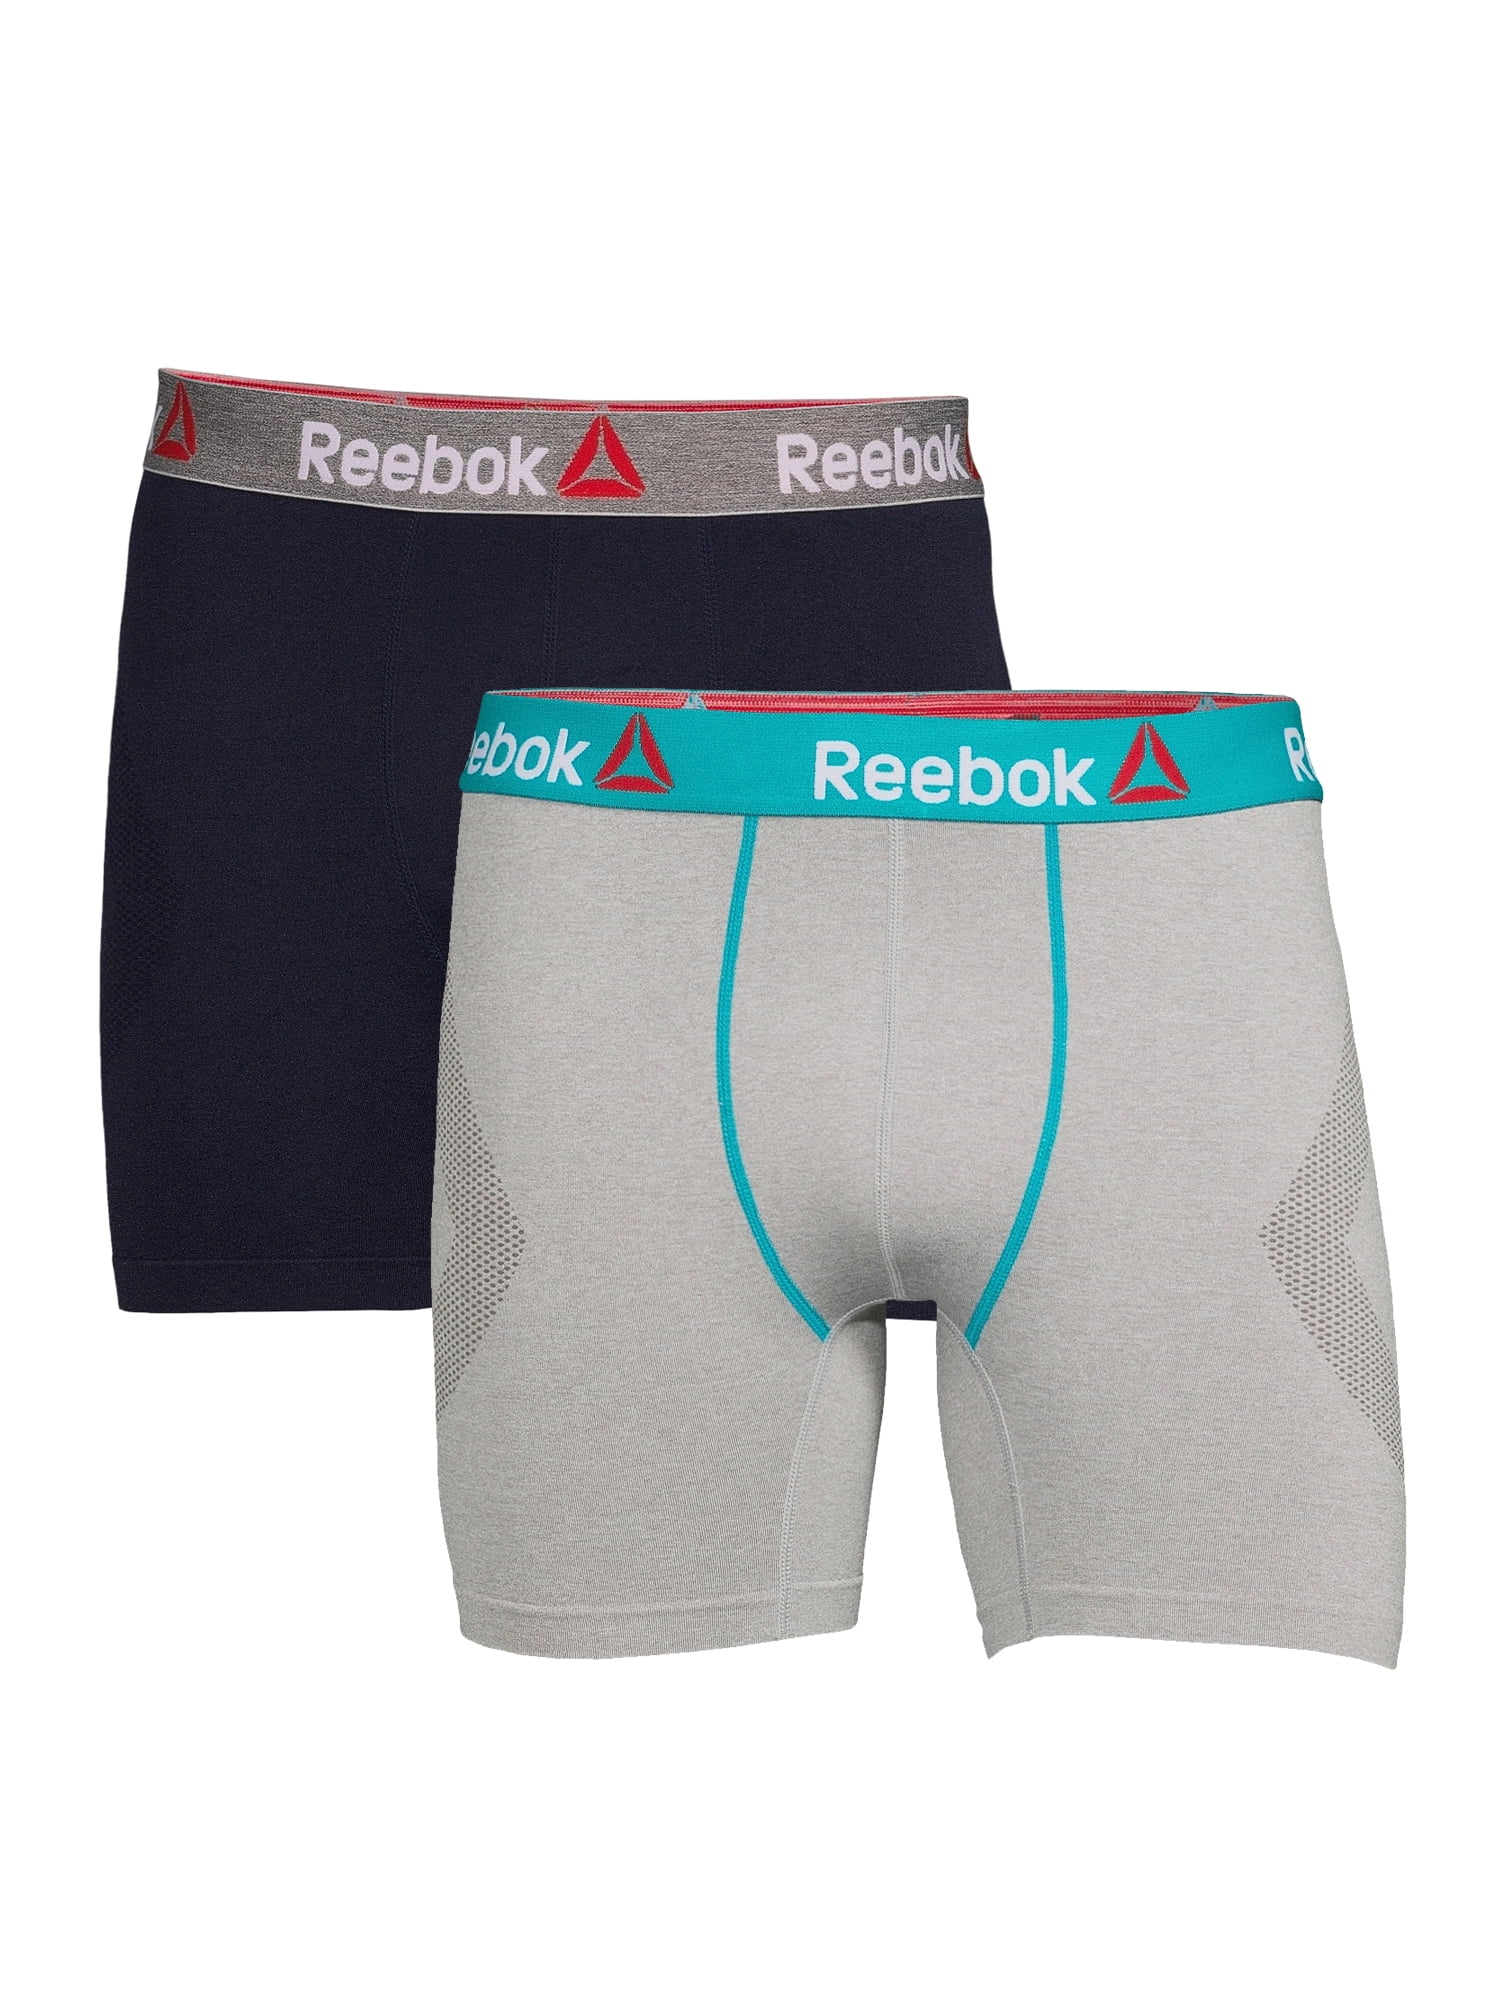 Reebok Men's Performance Boxer Briefs, 2-Pack, Sizes S-XL - Walmart.com